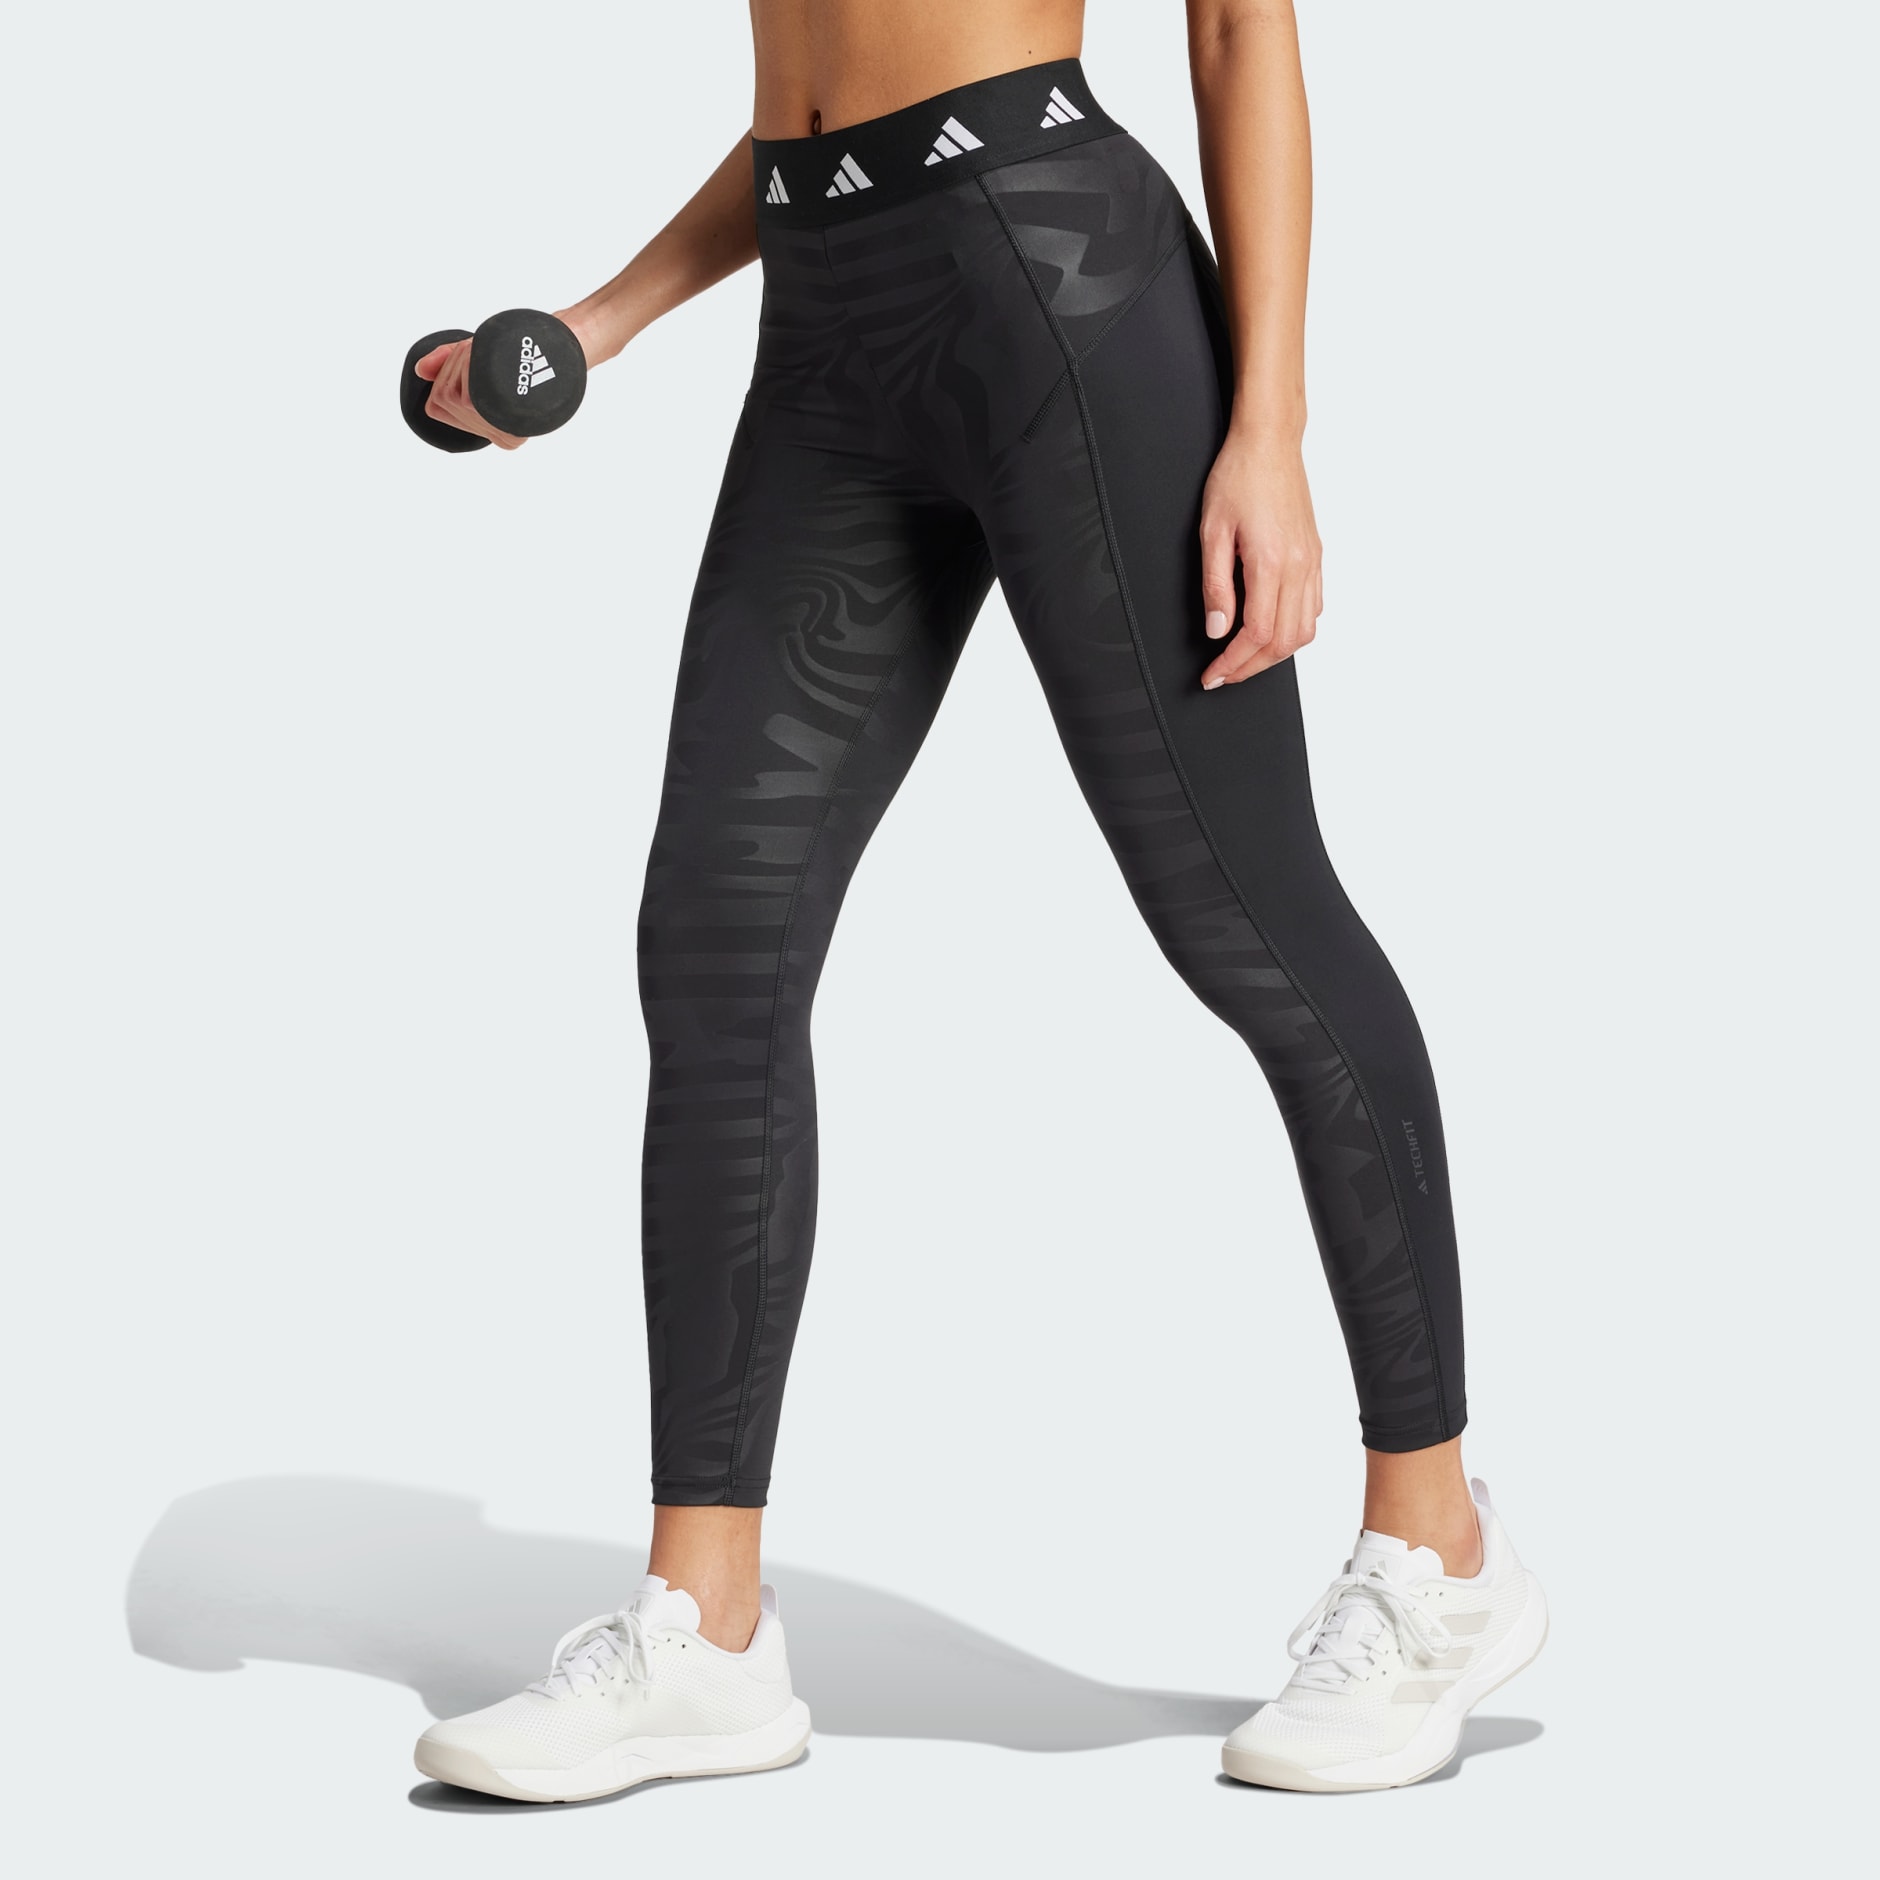 adidas Women's Standard 7/8 Running Tights, Black, Medium : :  Clothing, Shoes & Accessories